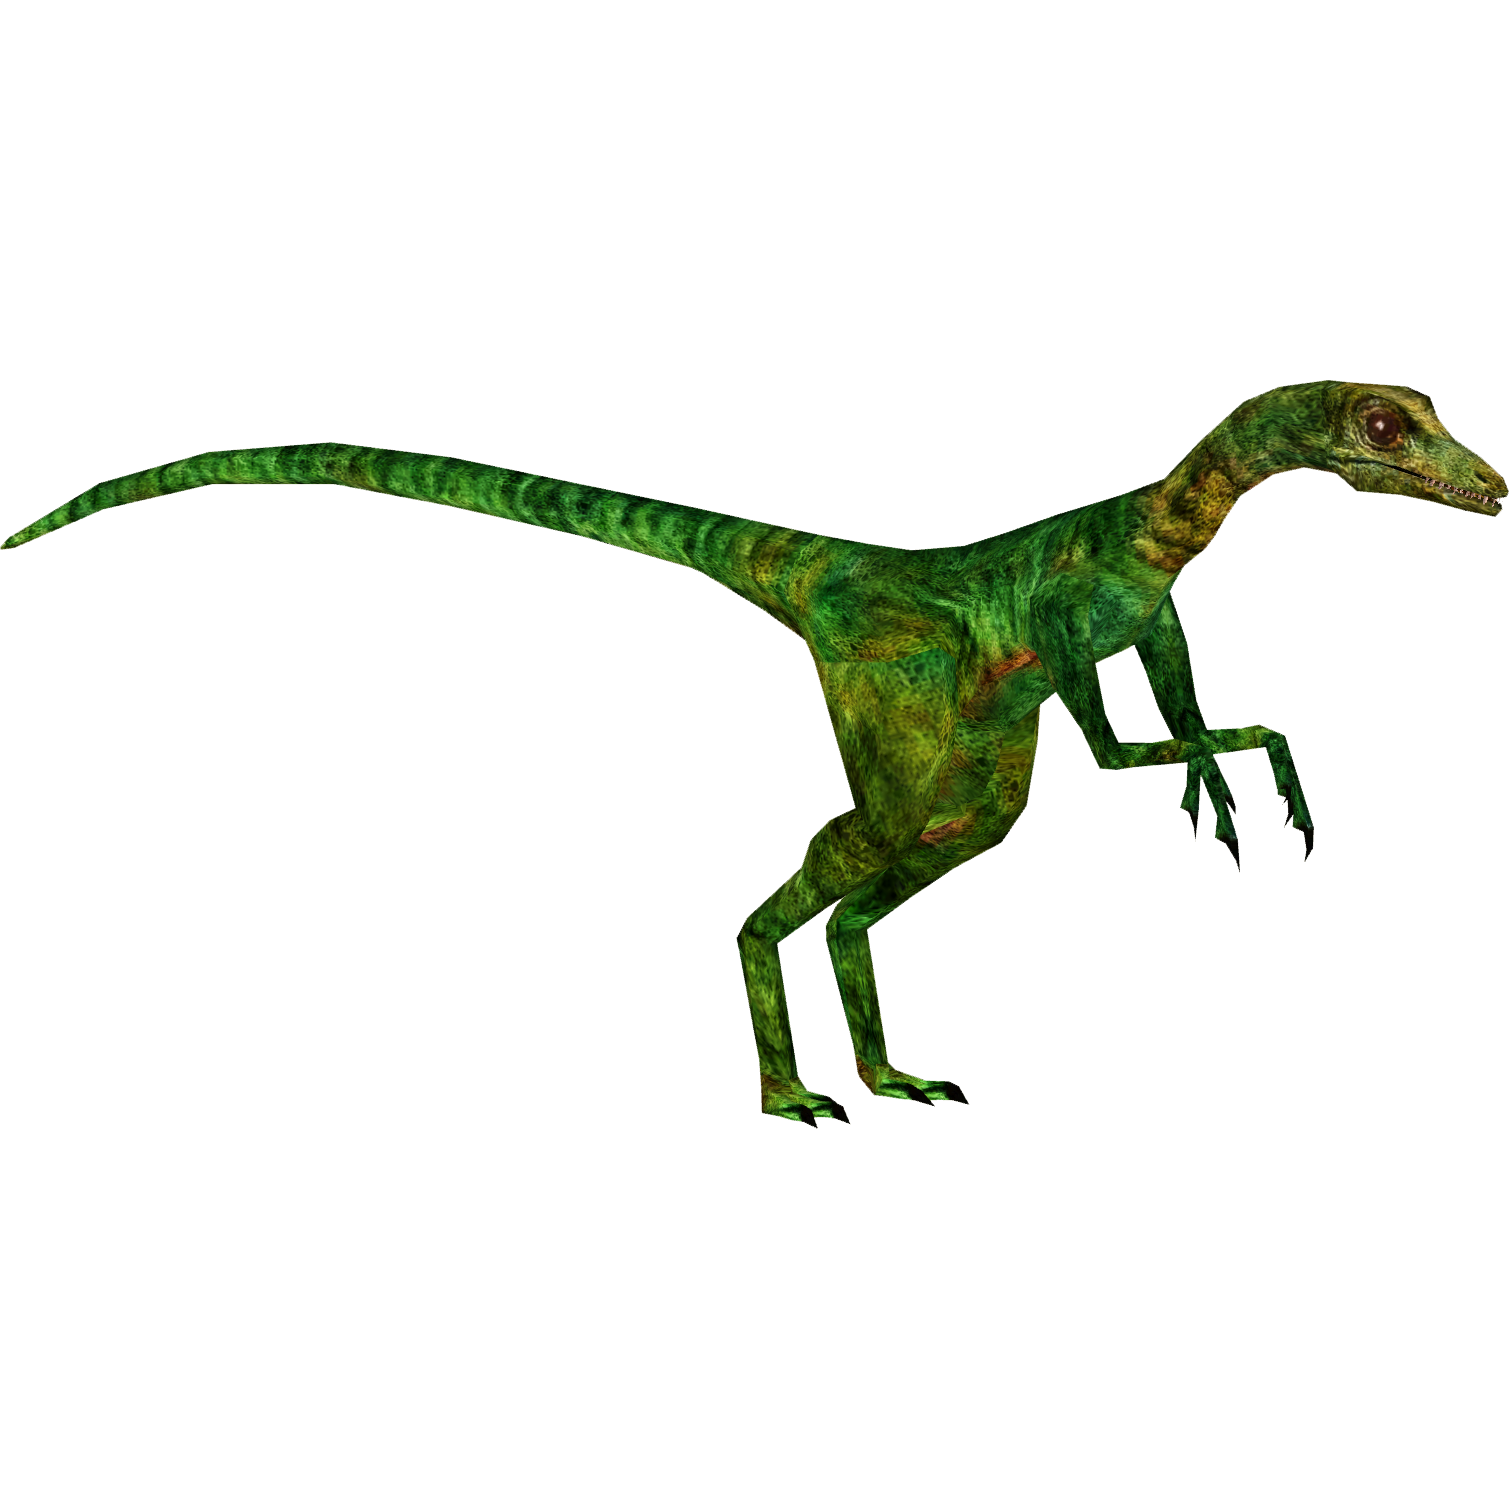 Jurassic Park Compsognathus Tyranachu Zt2 Download Library Wiki Fandom Powered By Wikia 